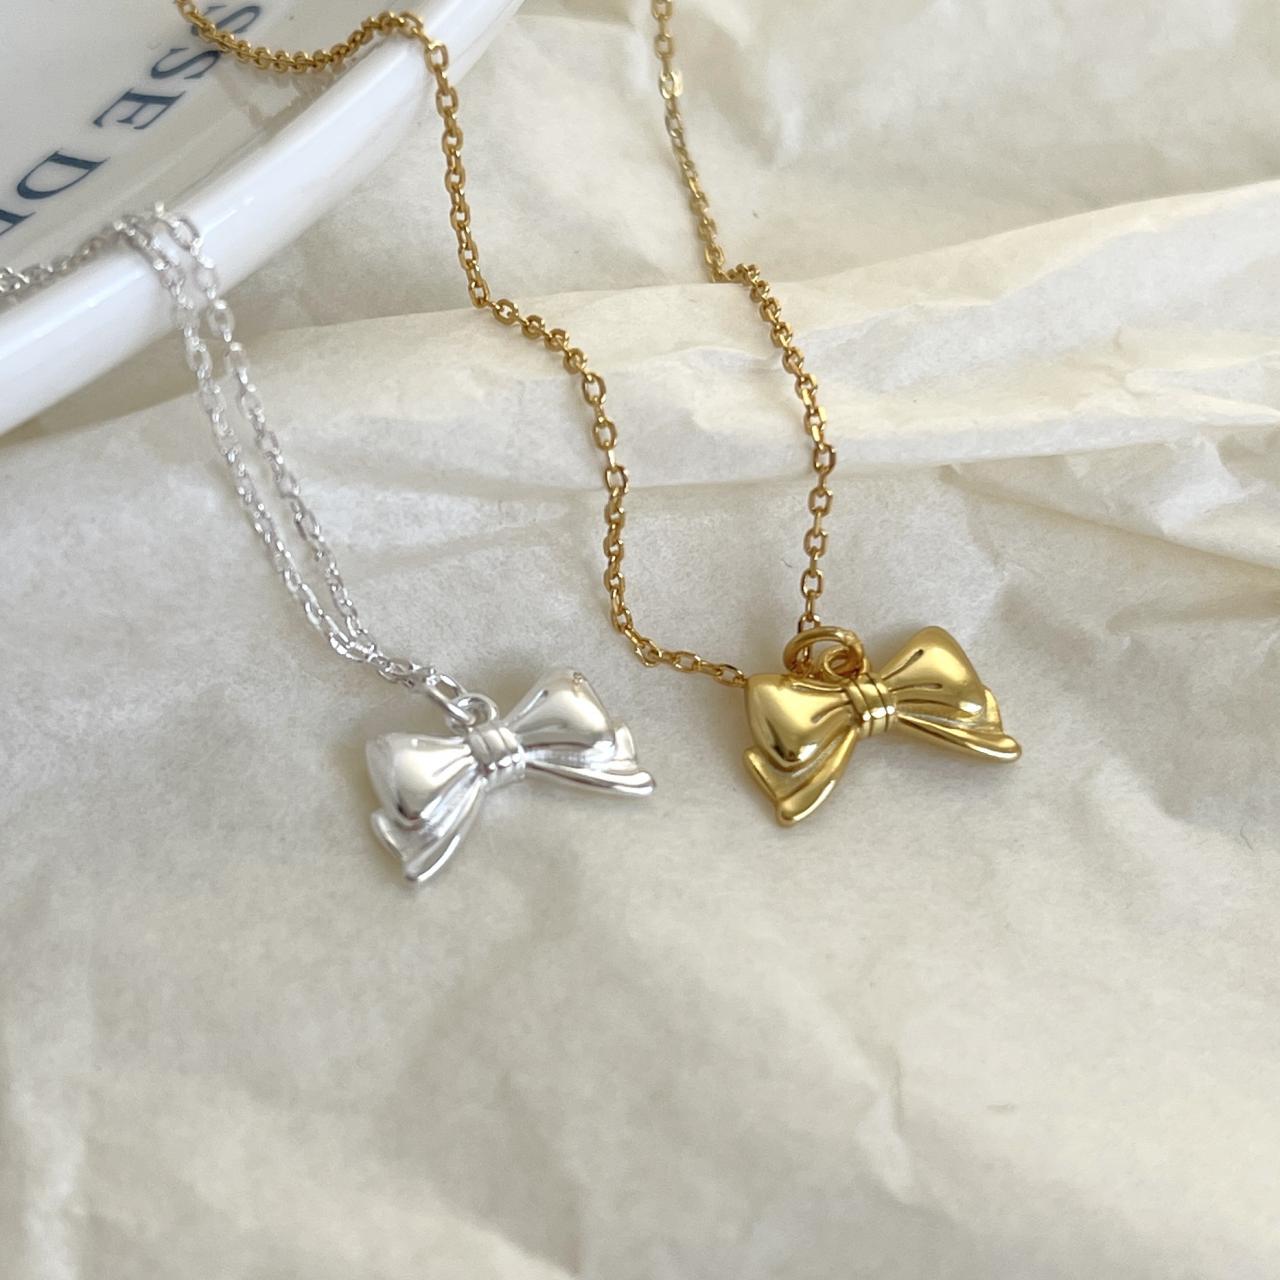 Sterling Silver Delicate Silver Color Bowknot Pendant Necklaces For Women Unique Design Fine Handmade Jewelry Gift